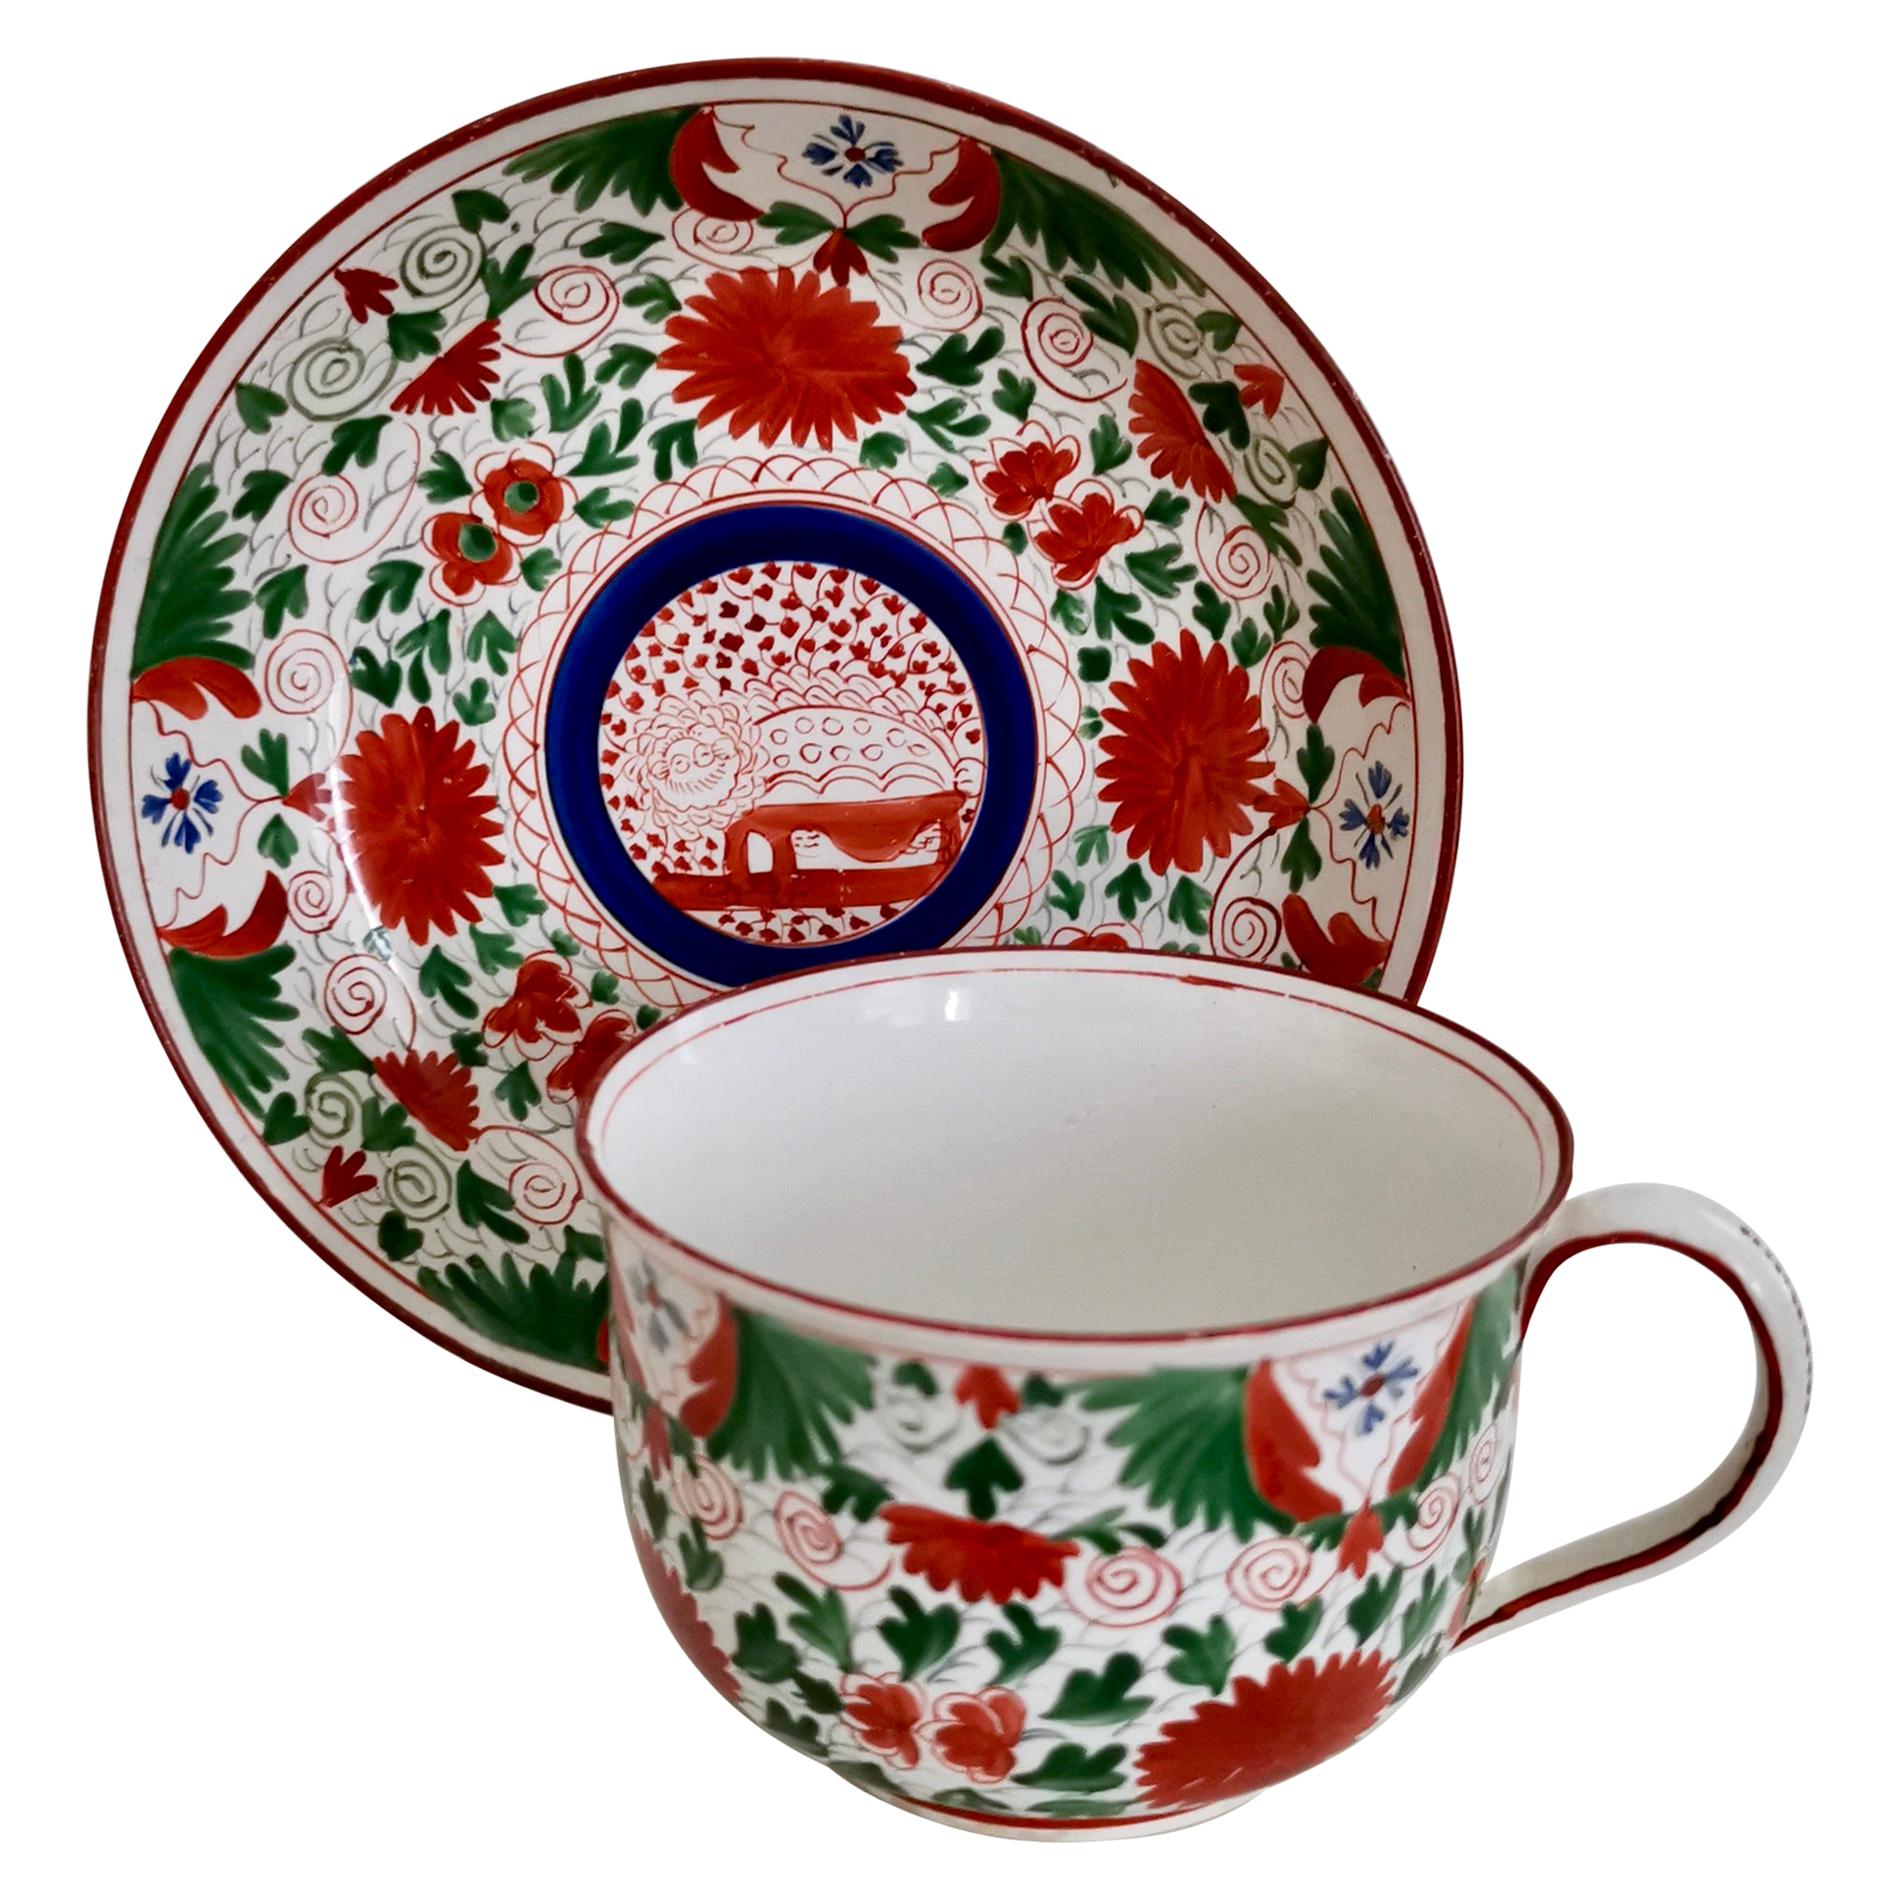 Minton Pottery Teacup, Crazy Cow Pattern, Georgian Era, circa 1805